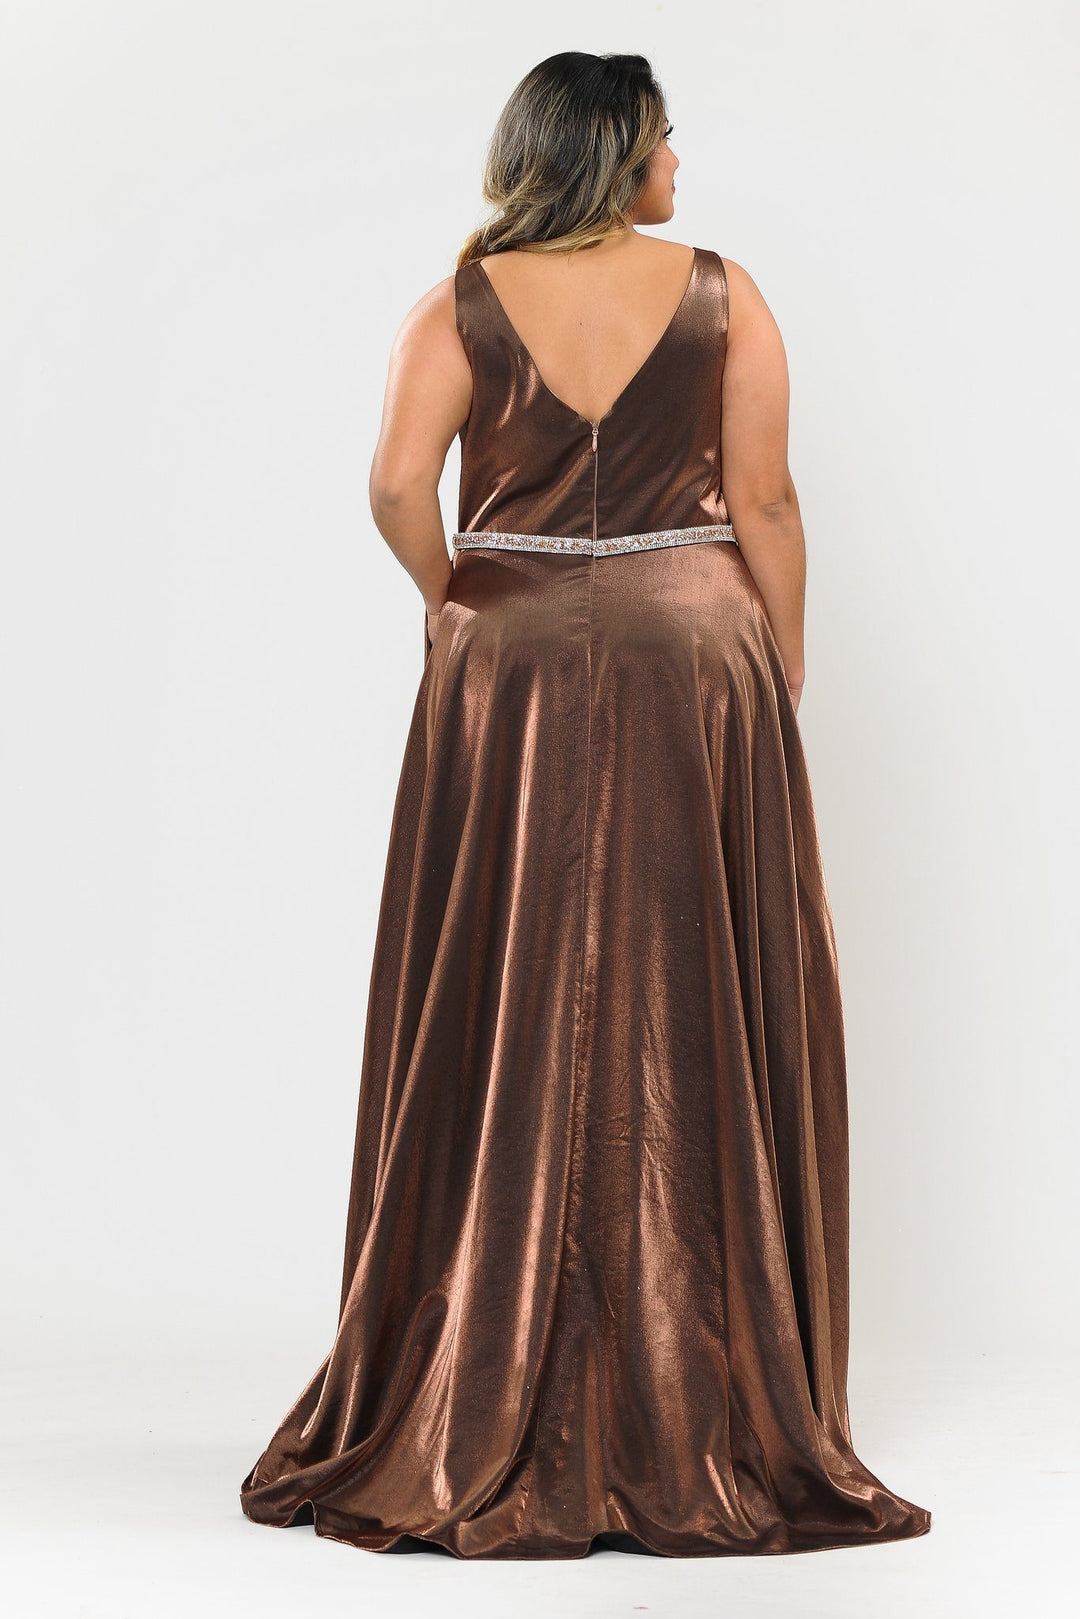 Plus Size Long Satin Deep V-Neck Dress by Poly USA W1062